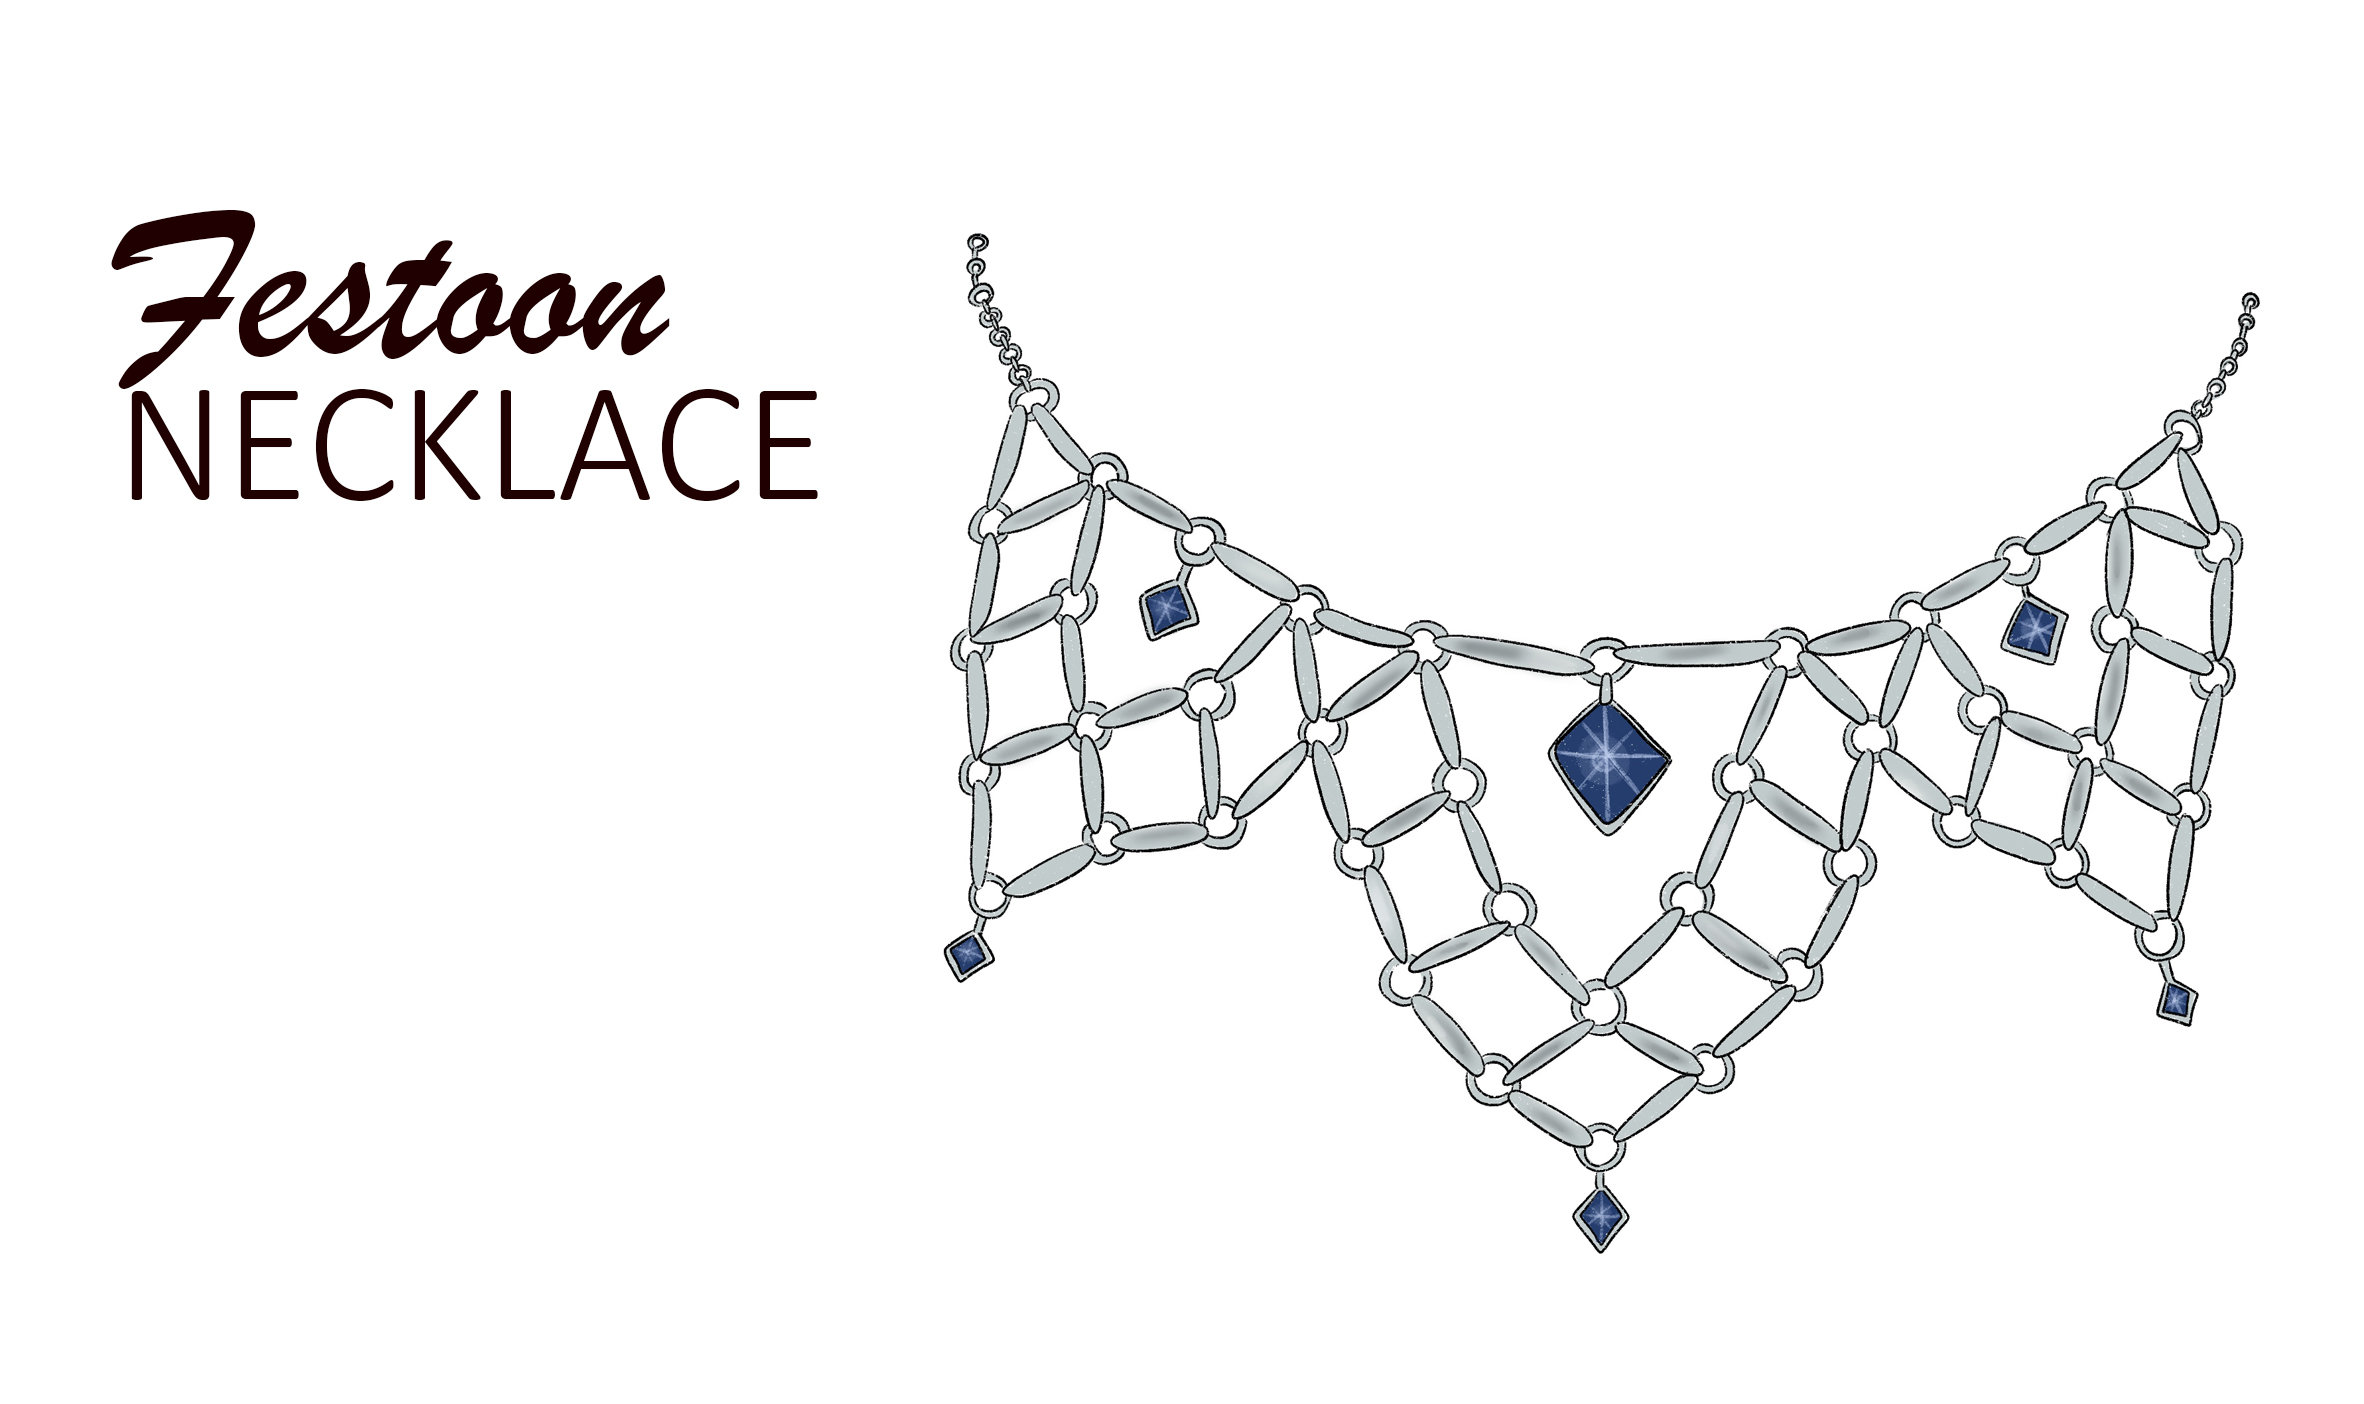 Festoon Necklace